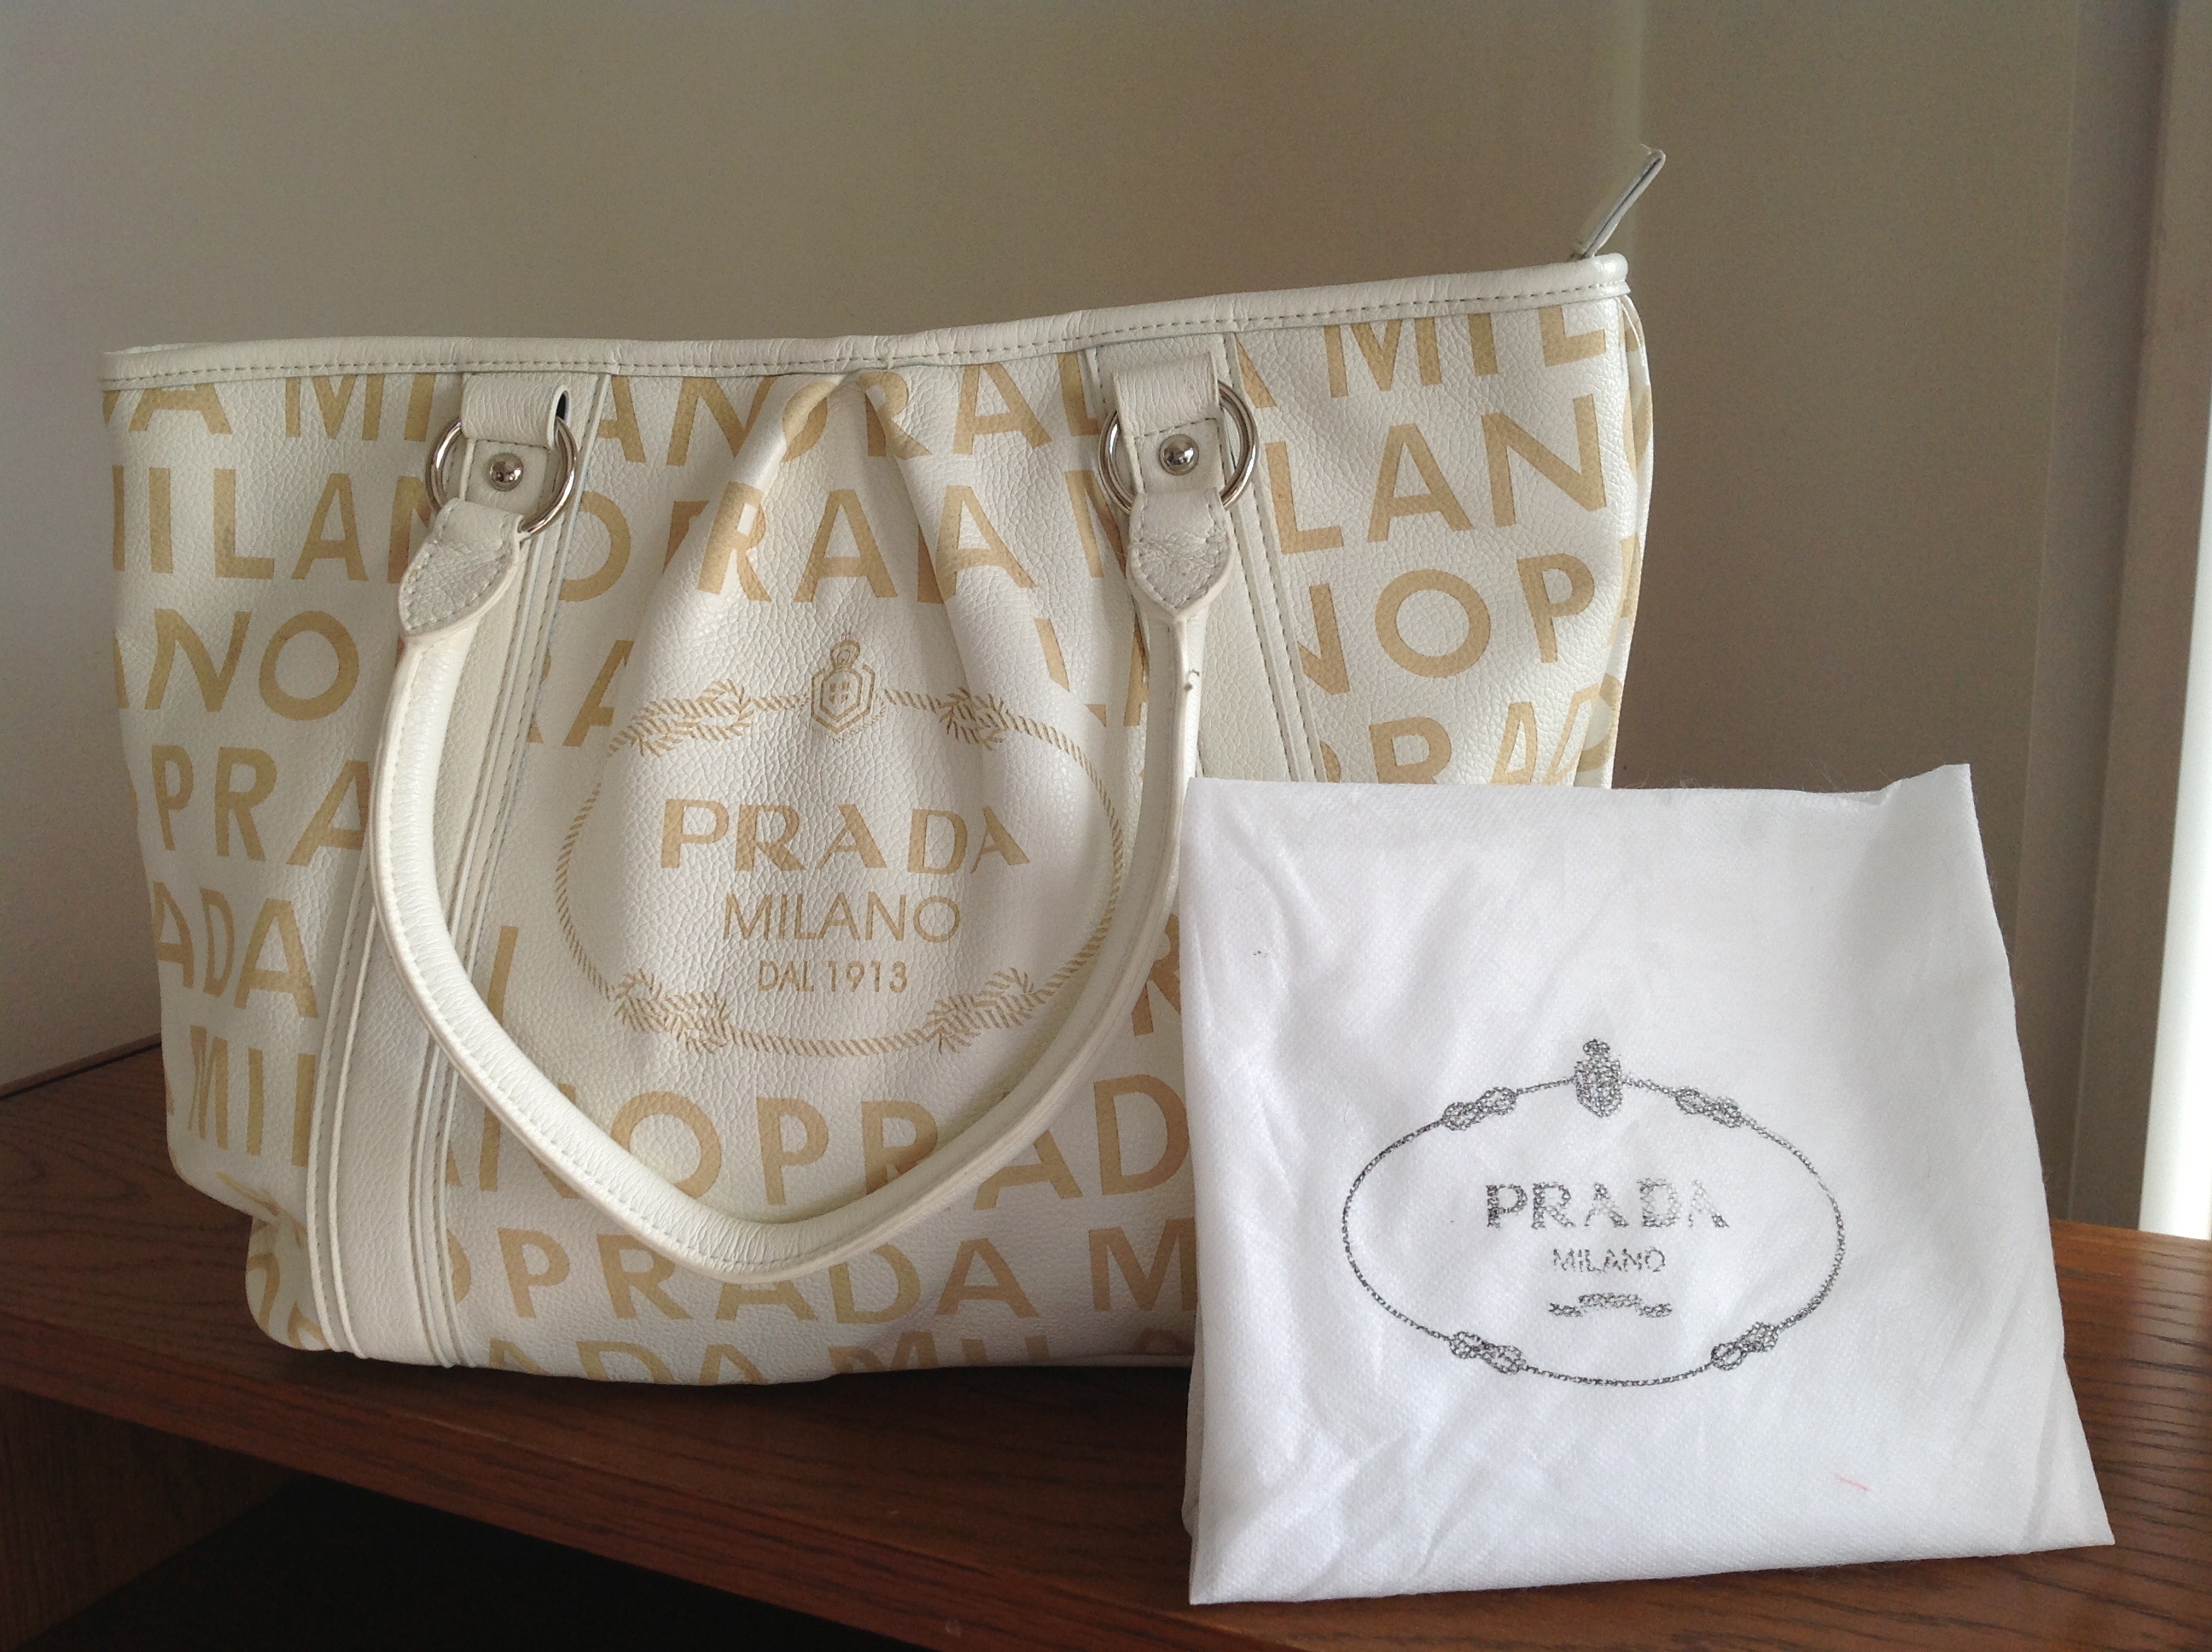 Vanilla colored Prada purse asking price $40.00